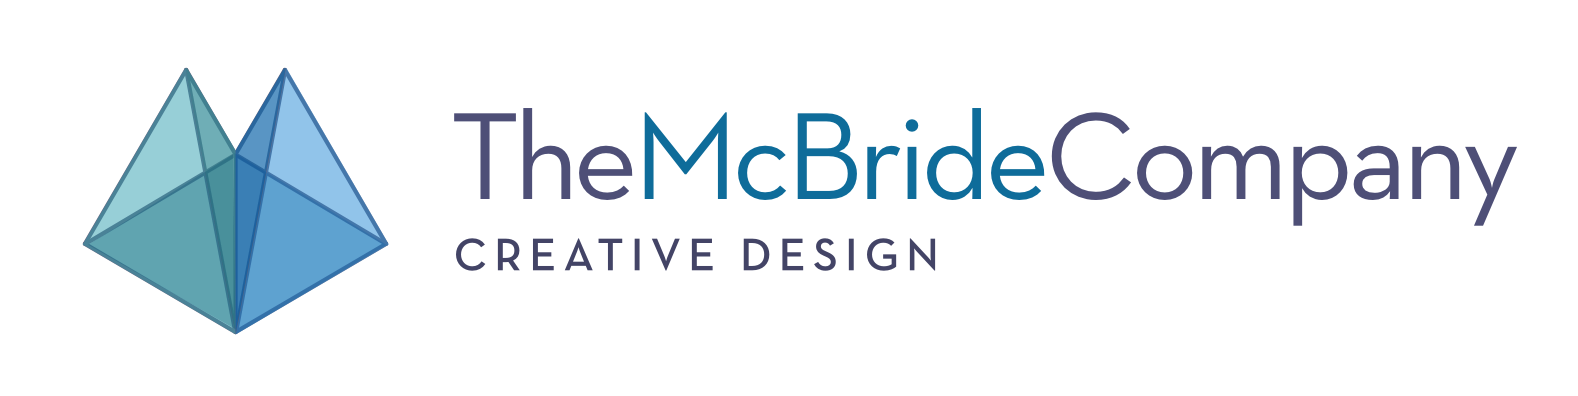 mcbride-logo-full.png